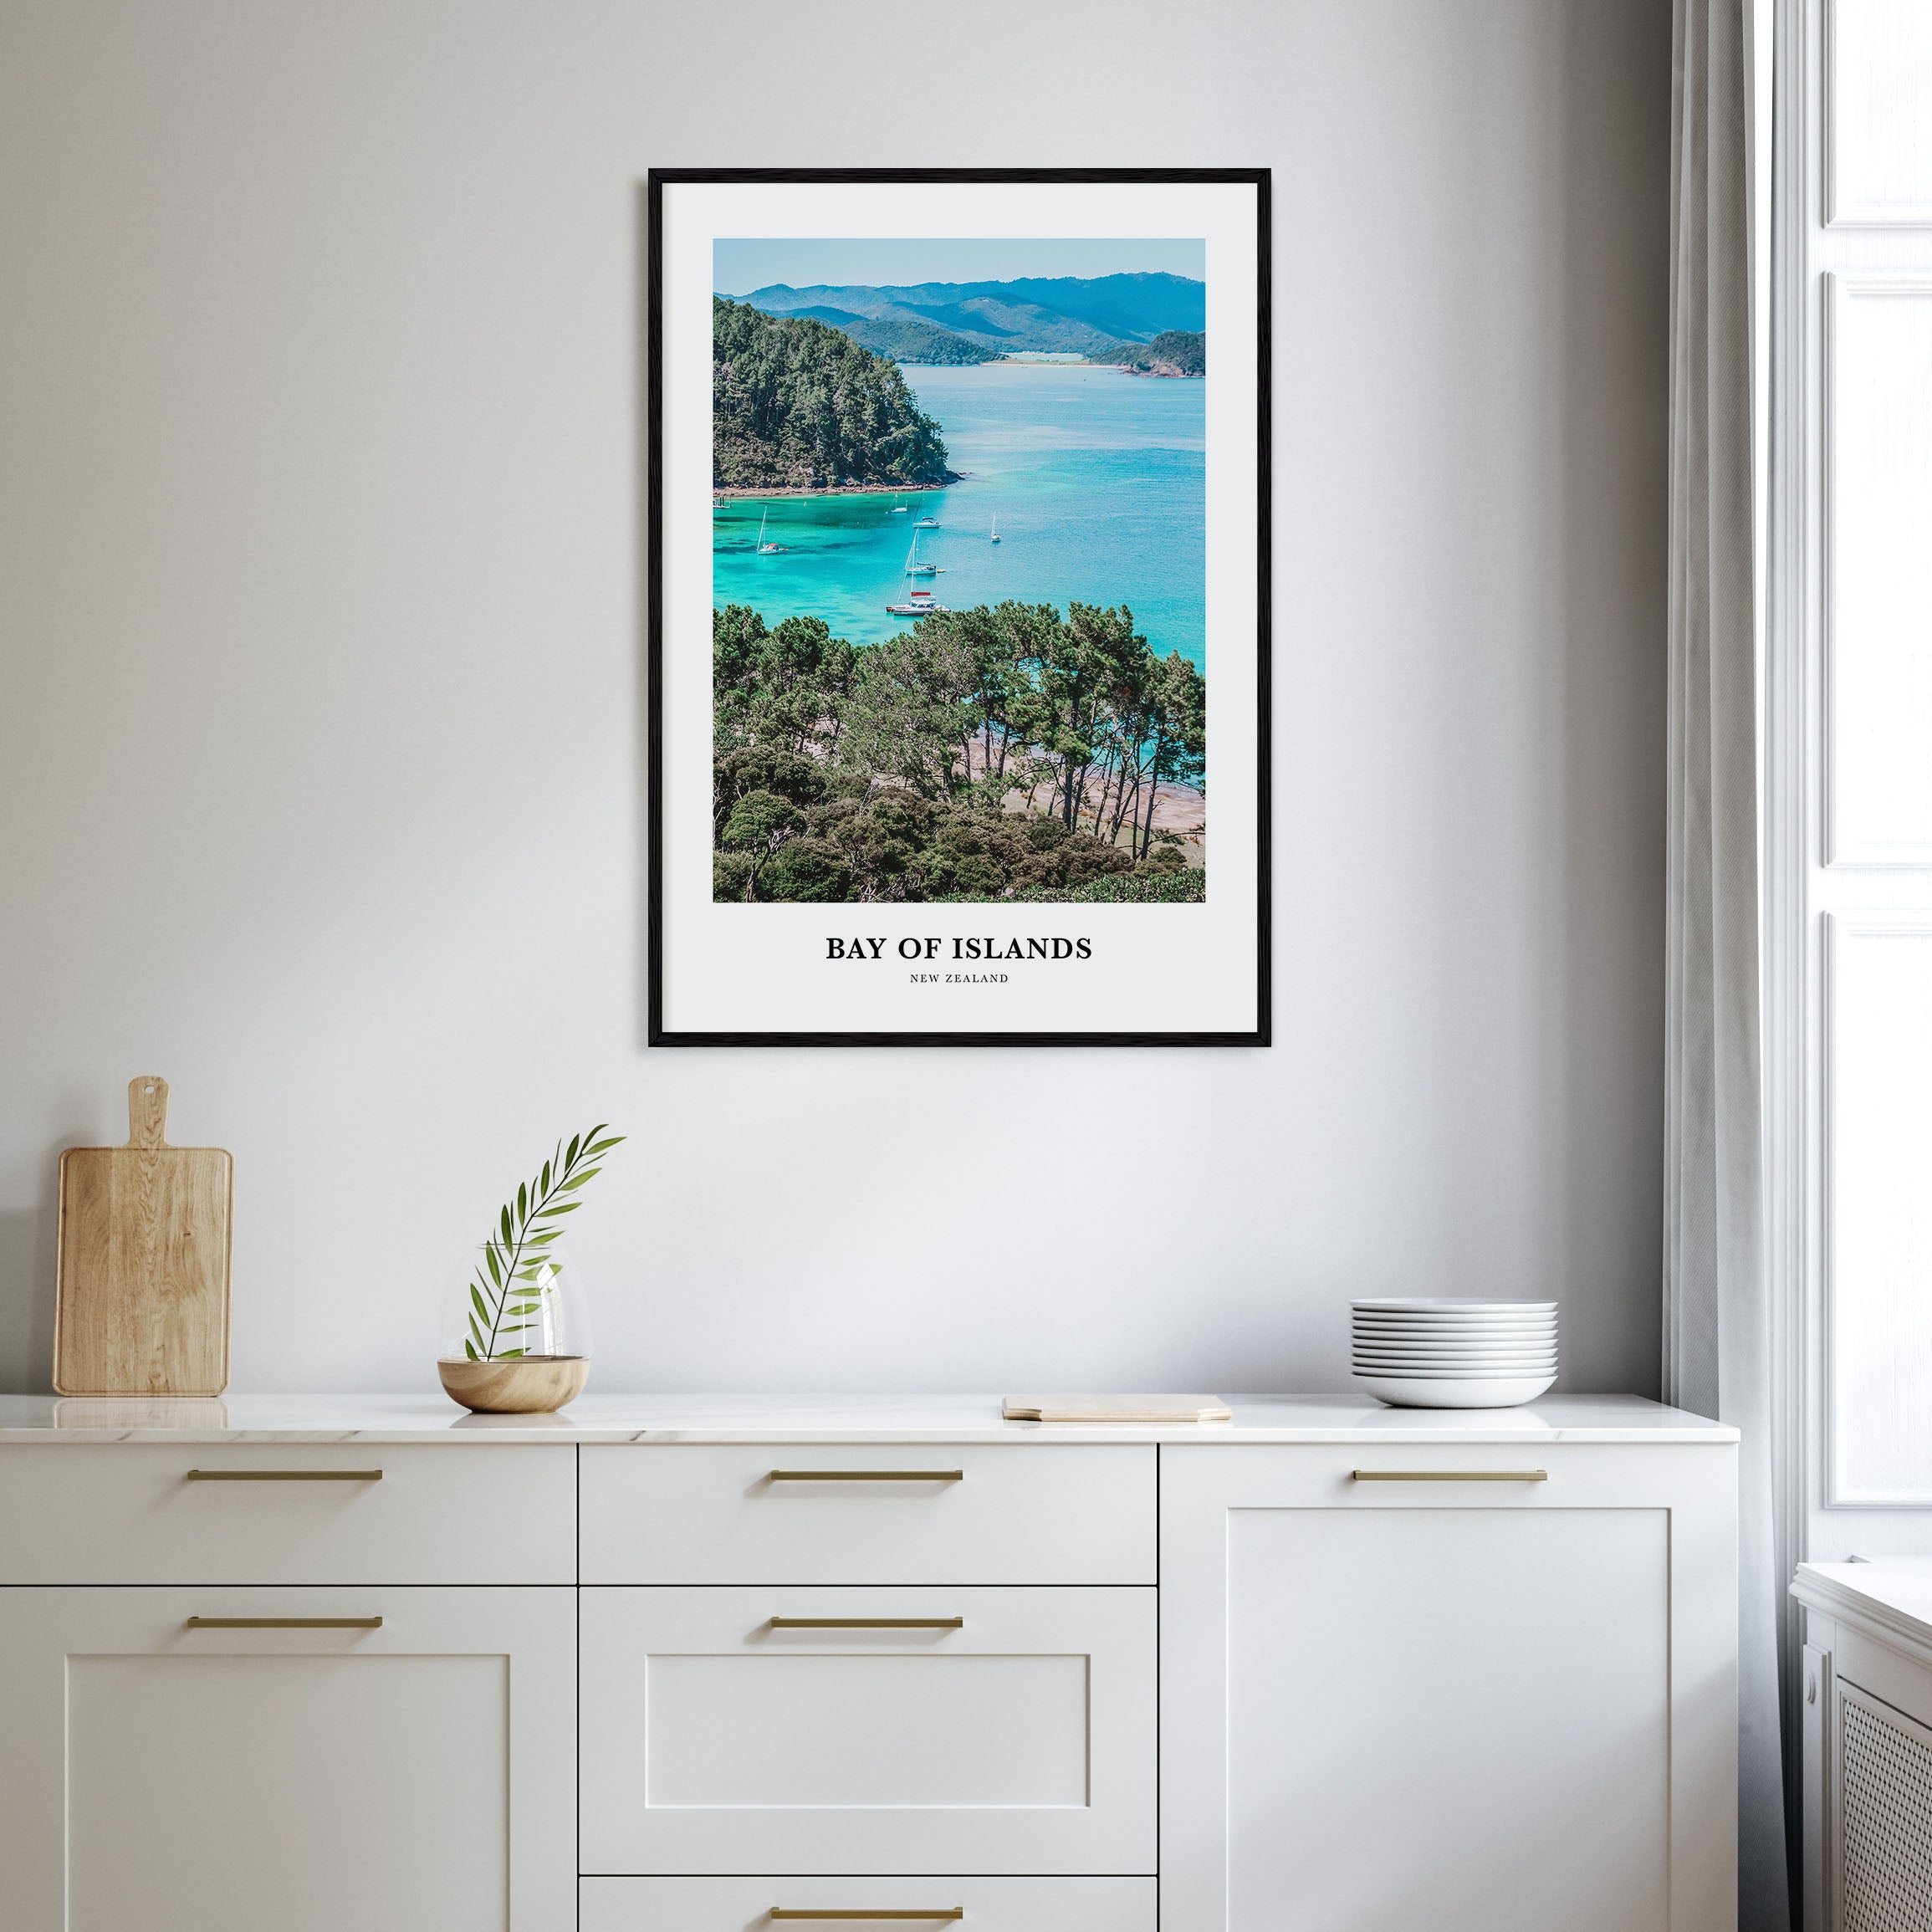 Bay of Islands Portrait Color Poster